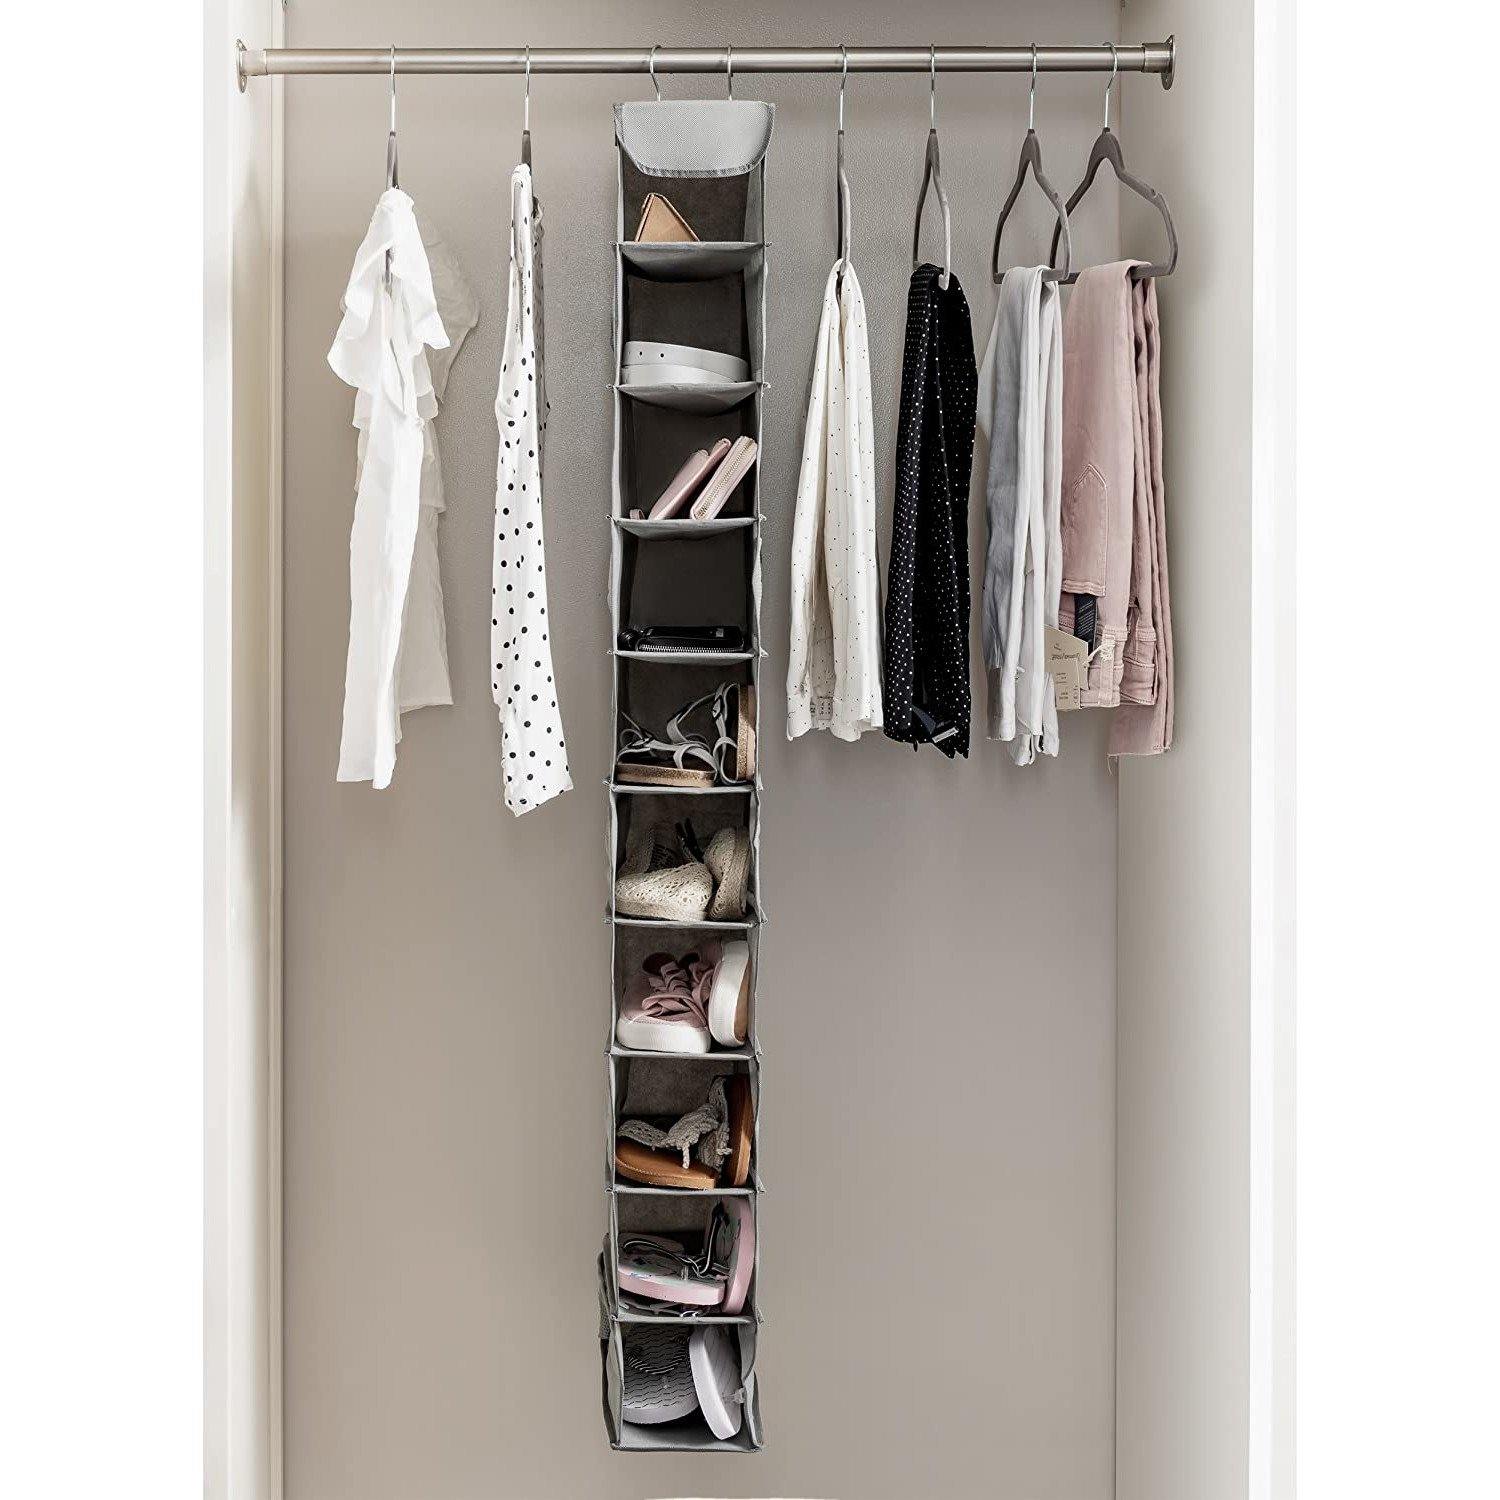 MISSLO Over The Door Shoe Organizer Hanging Closet Holder Hanger Storage Bag  Rack with 24 Large Mesh Pockets Gray  Amazonin Home  Kitchen